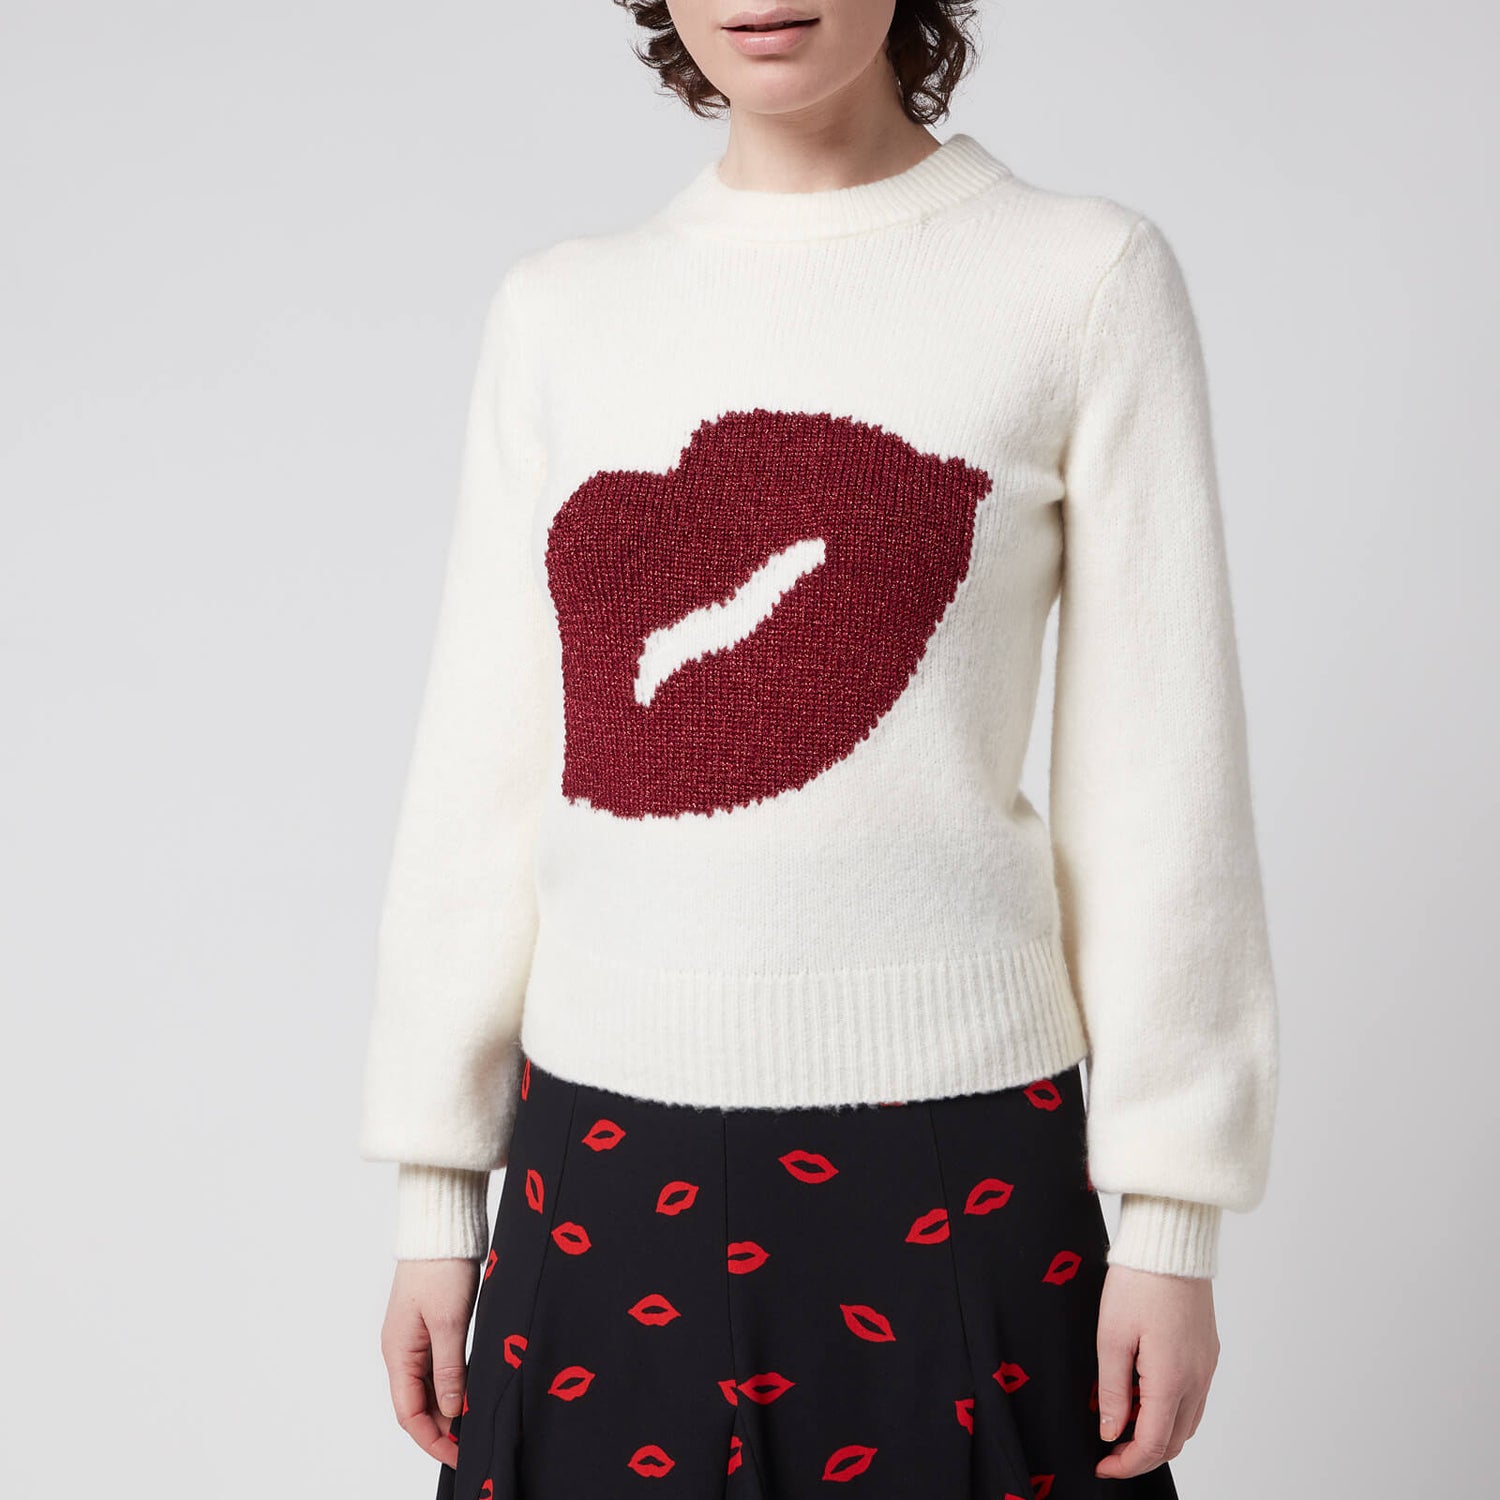 Kate Spade New York Women's Sparkle Lips Sweater - French Cream - XS